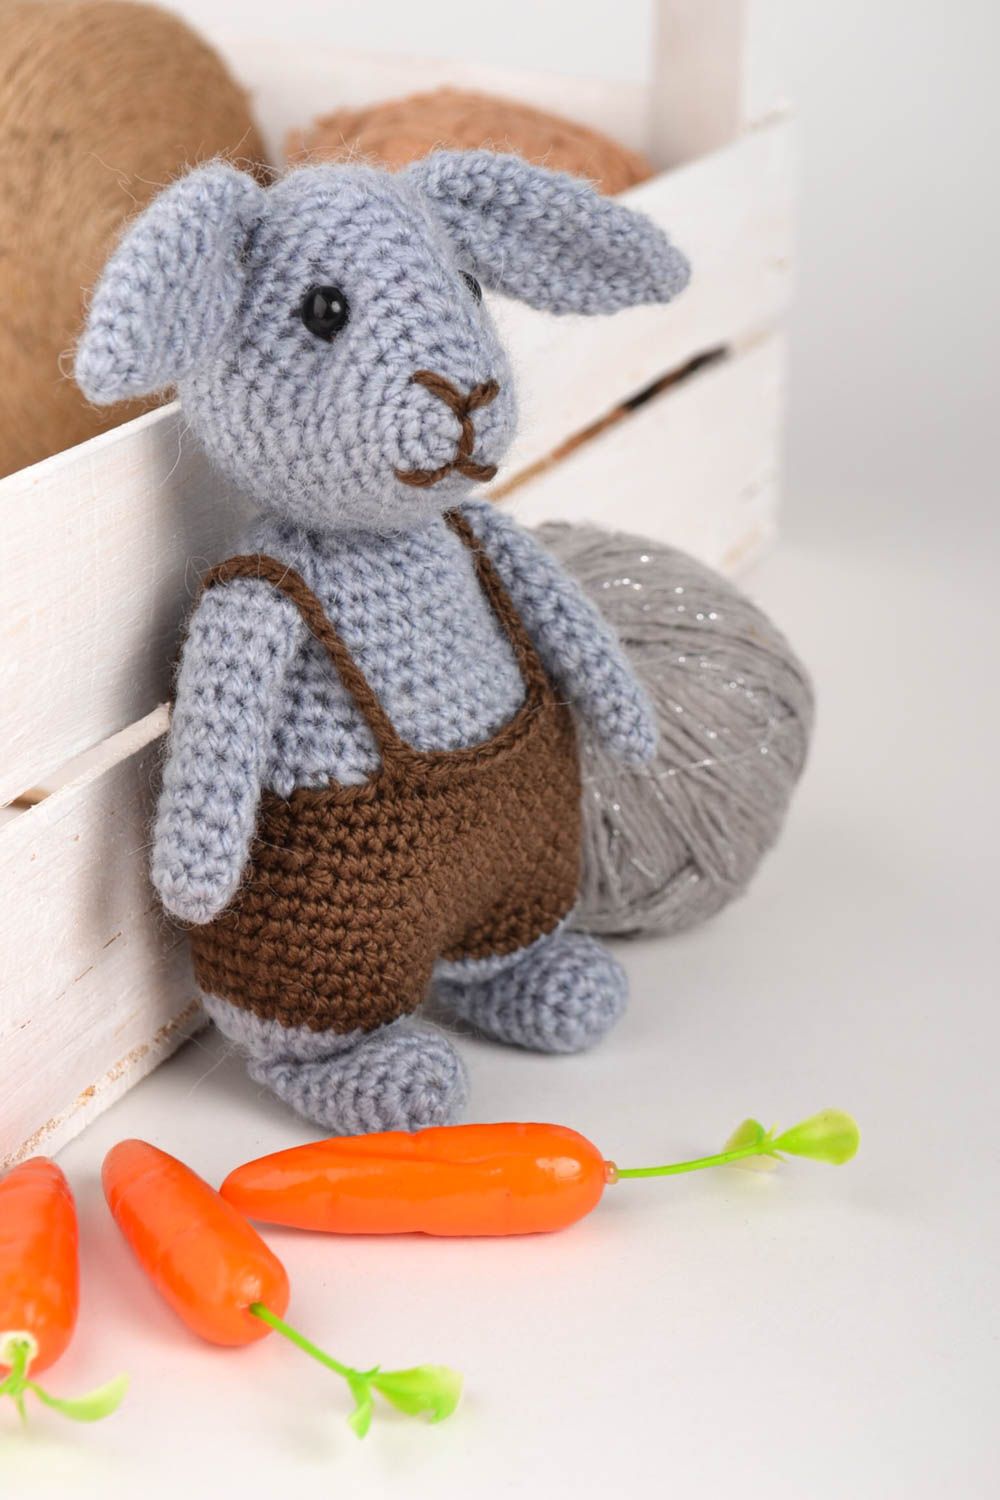 Handmade soft toy animal toys nursery decor best gifts for kids stuffed animals photo 1